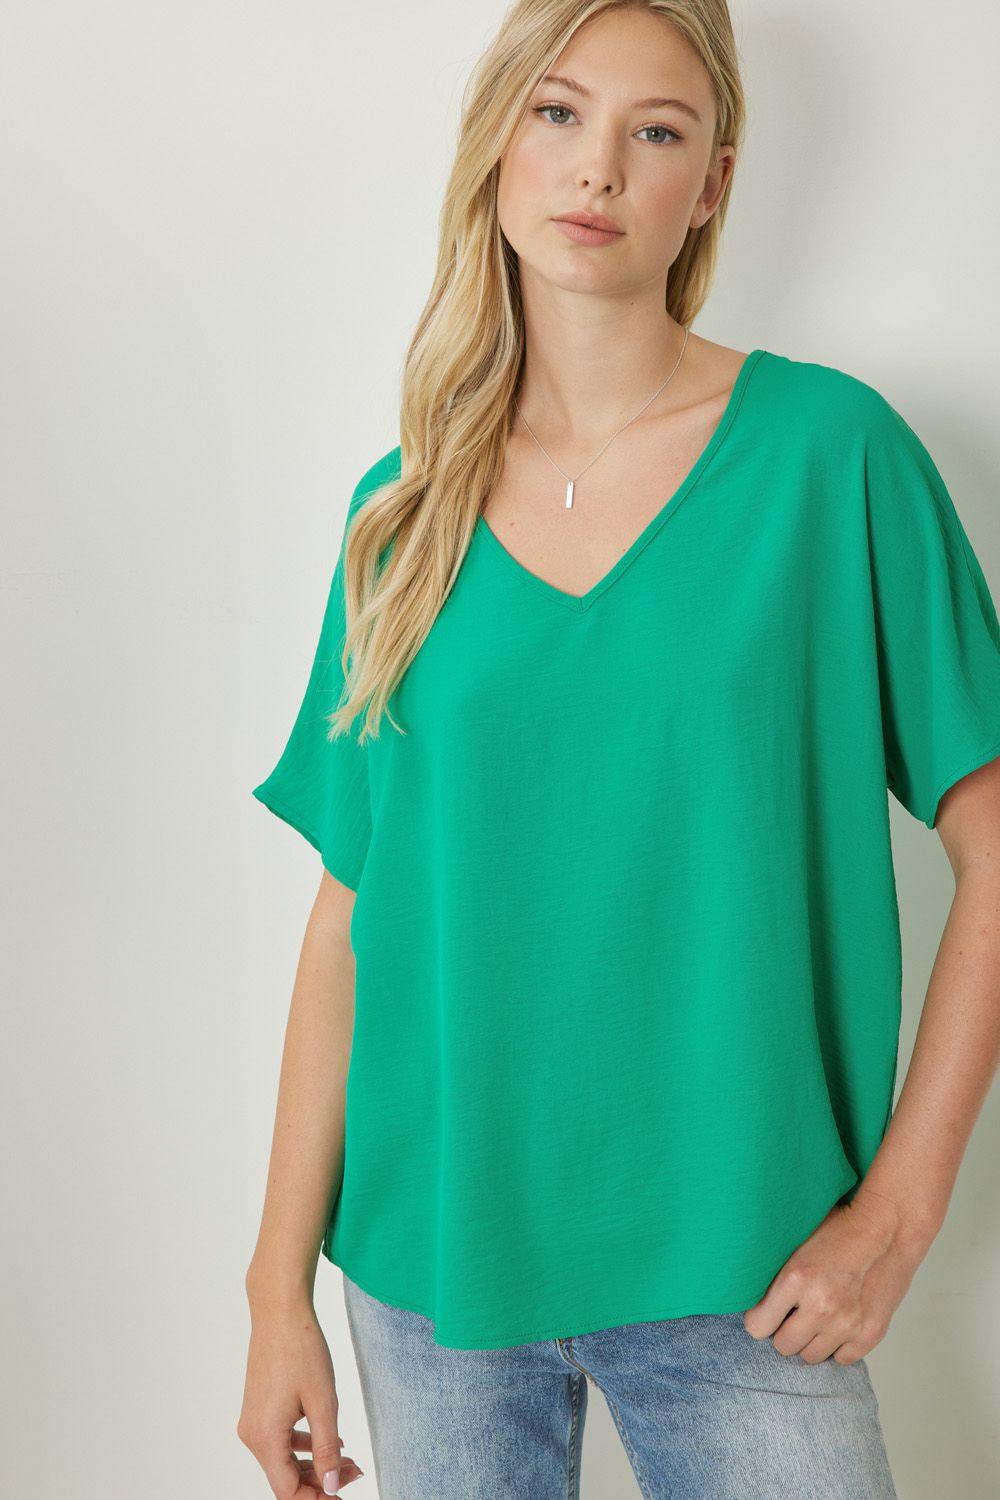 Entro brand basic oversized lightweight colorful tops v neck kelly green